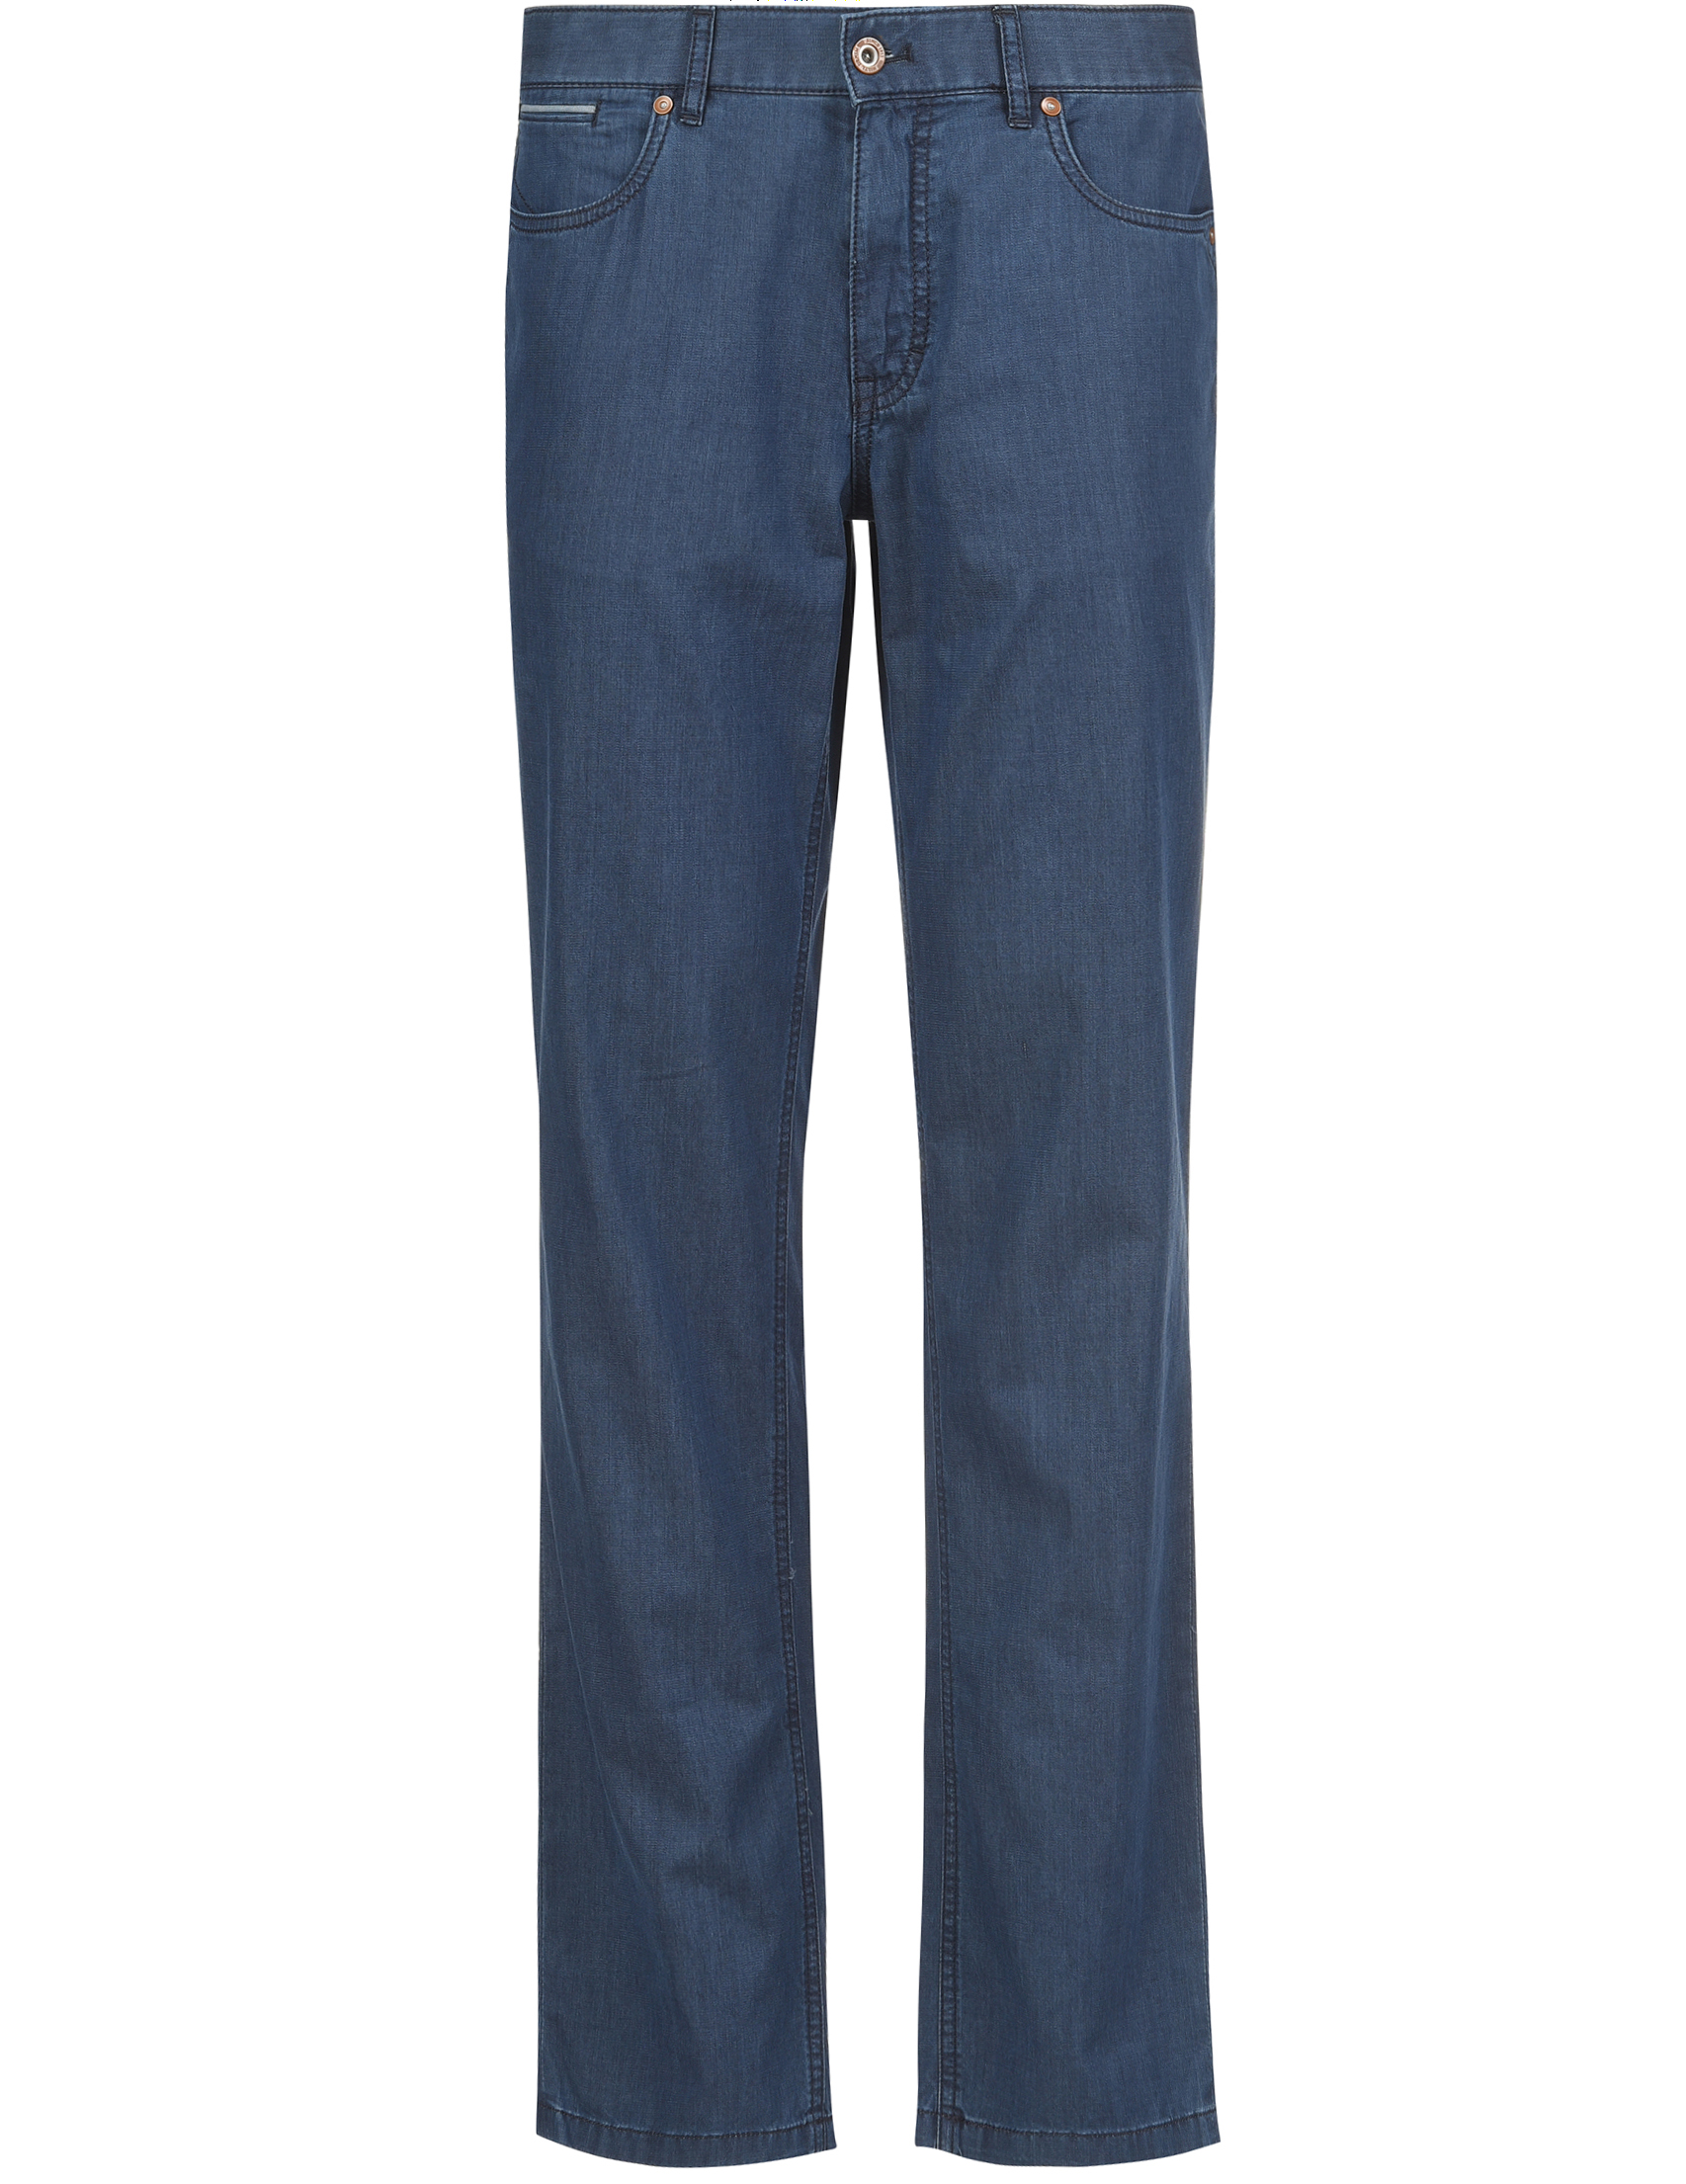 Мужские джинсы HILTL S75739-40-62900_blue